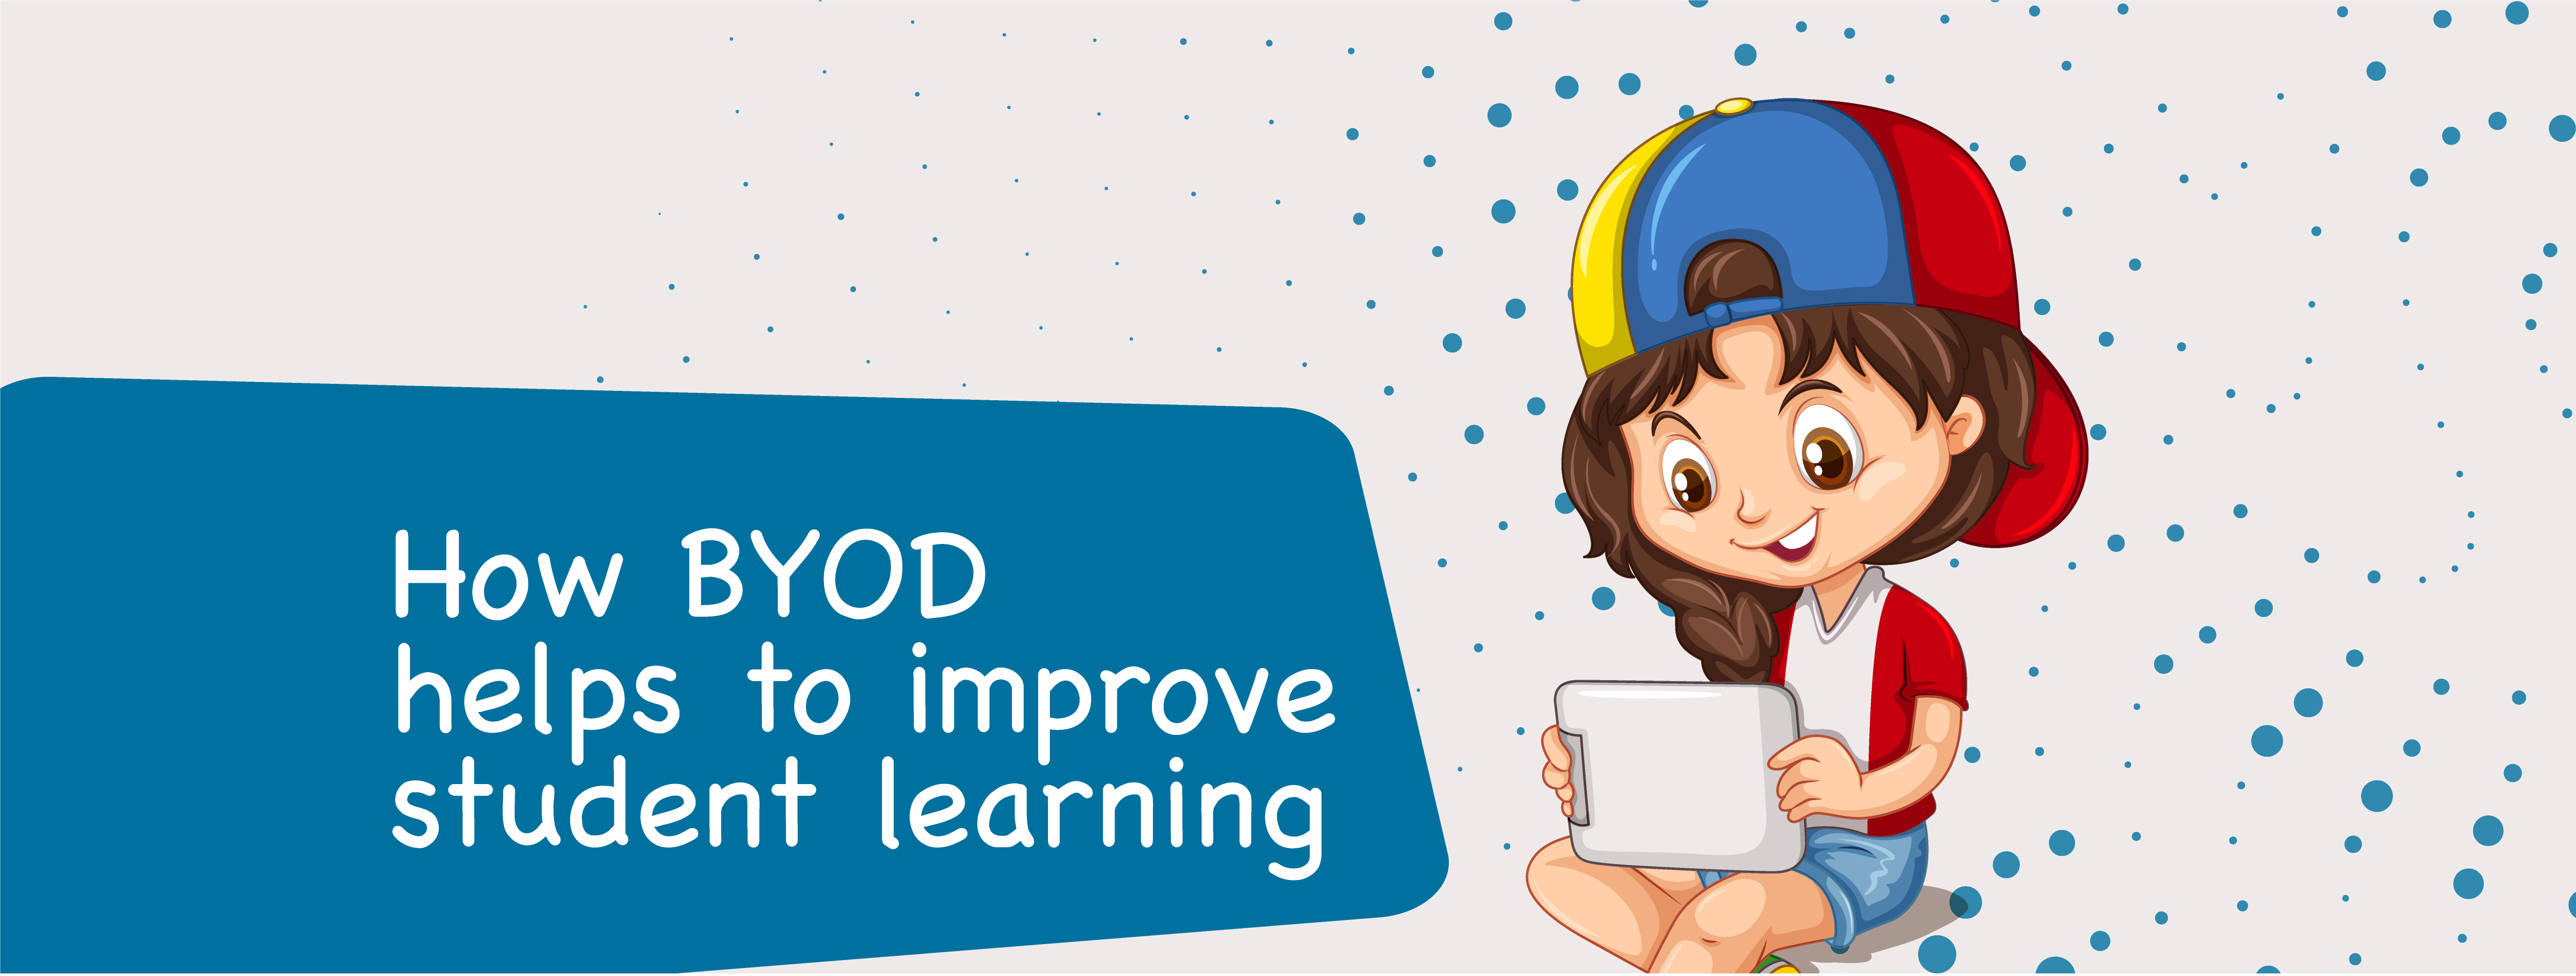 BYOD Improves Student Learning - TechnoKids Blog